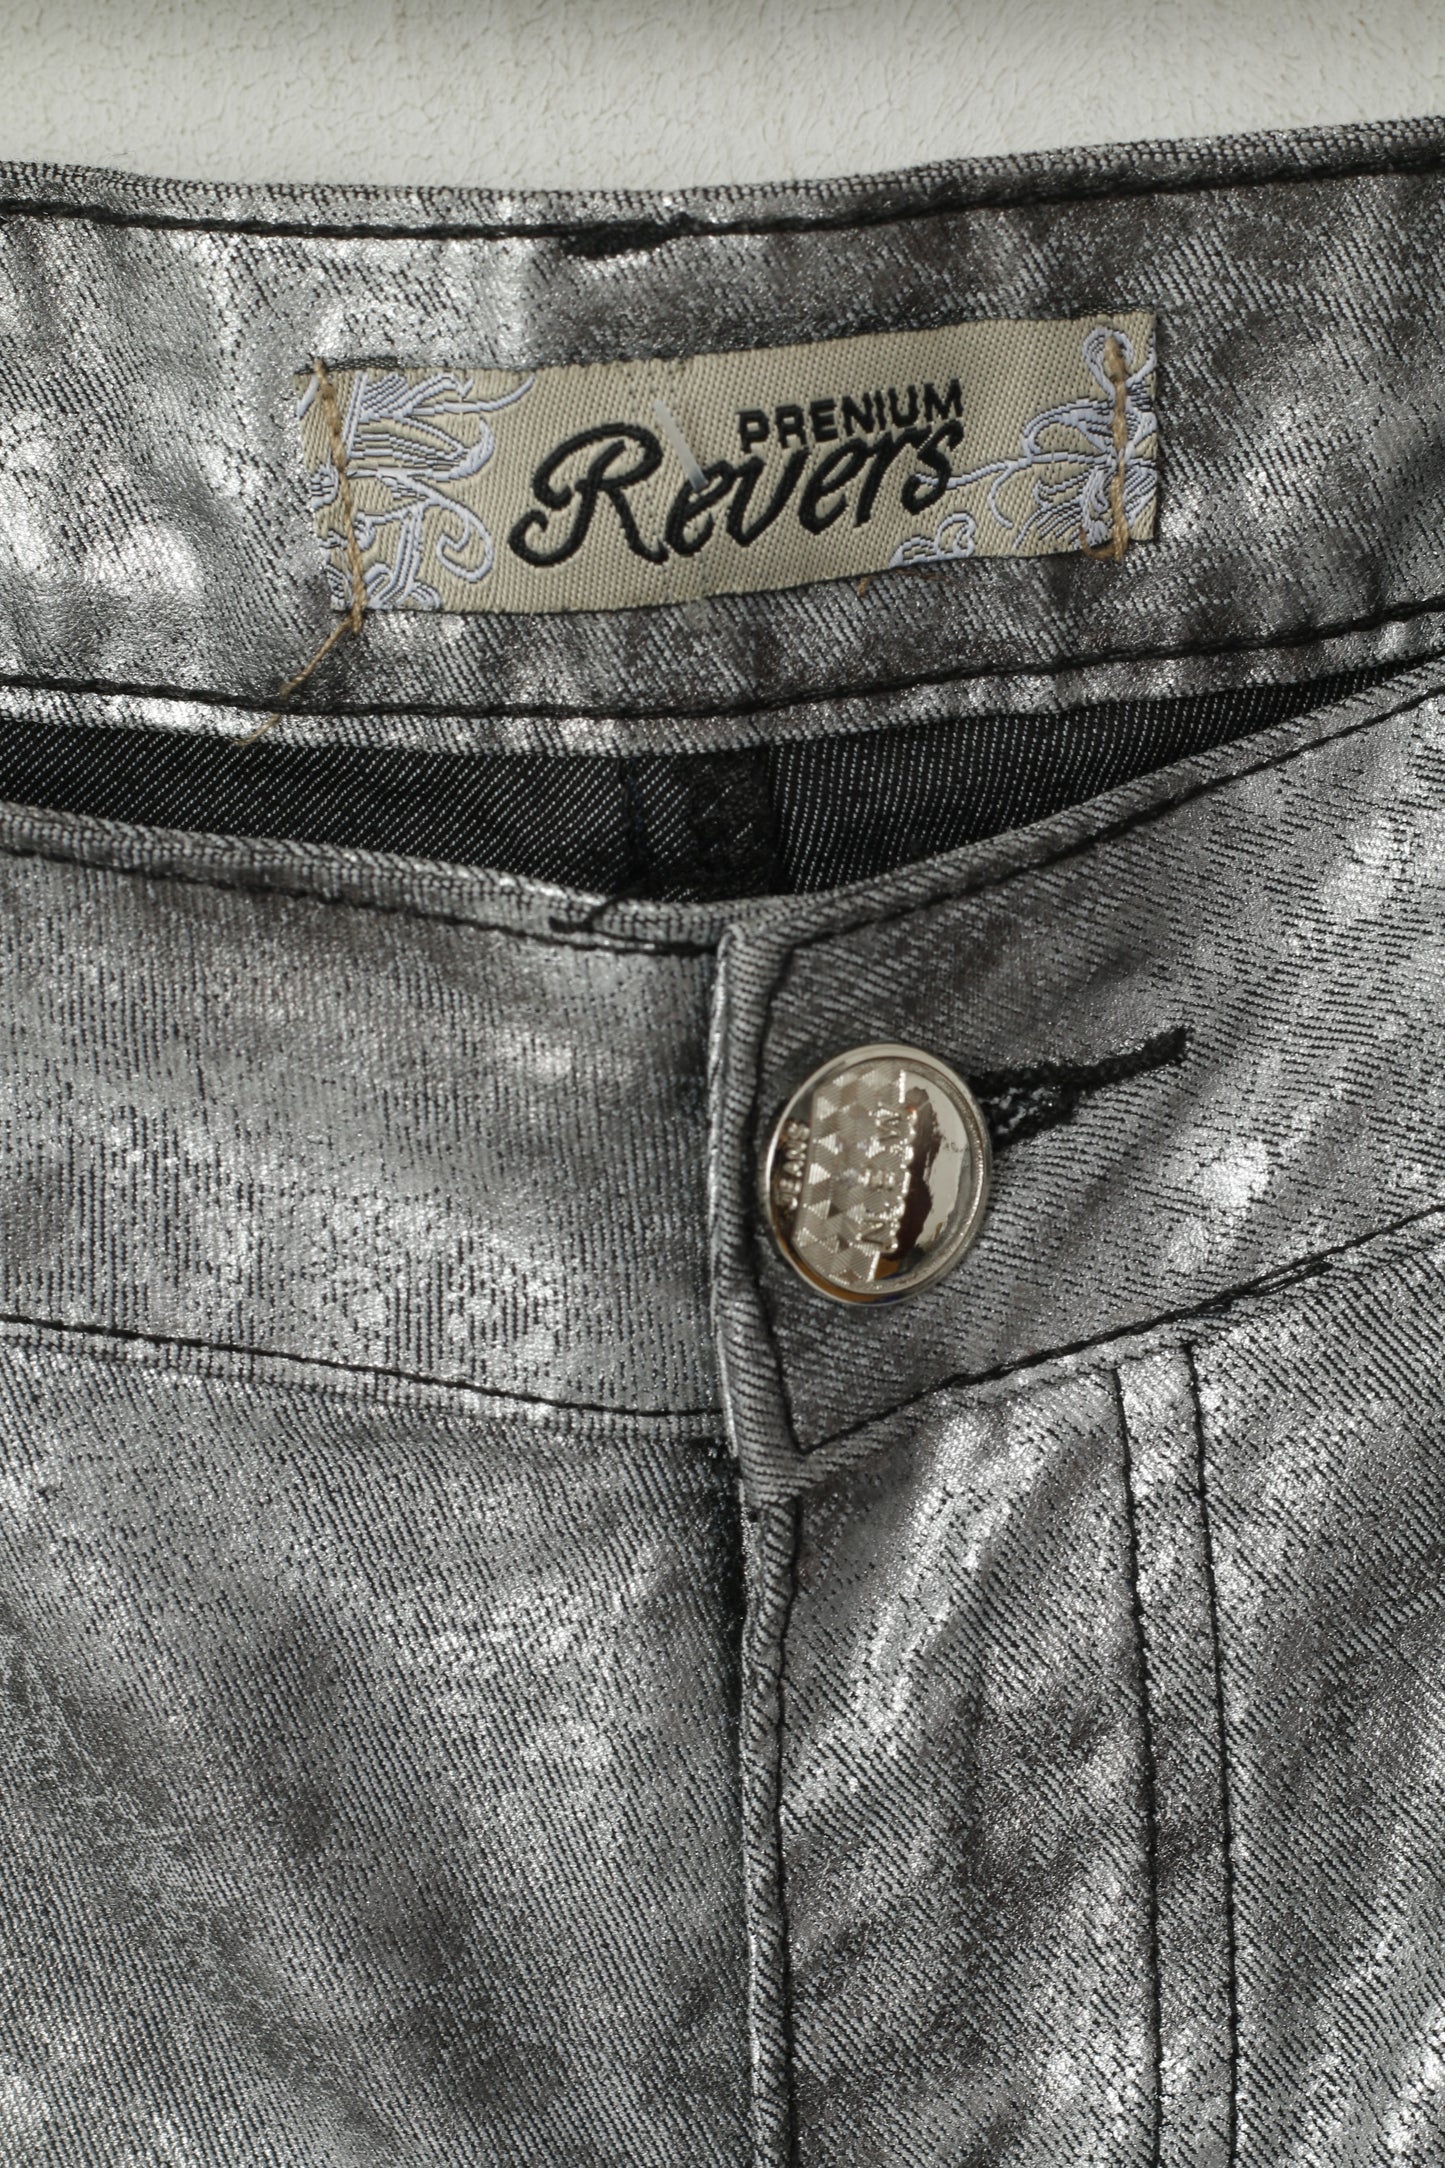 Prenium Revers Women 40 L Trousers Silver Shiny Cotton Stretch Skinny Party Pants